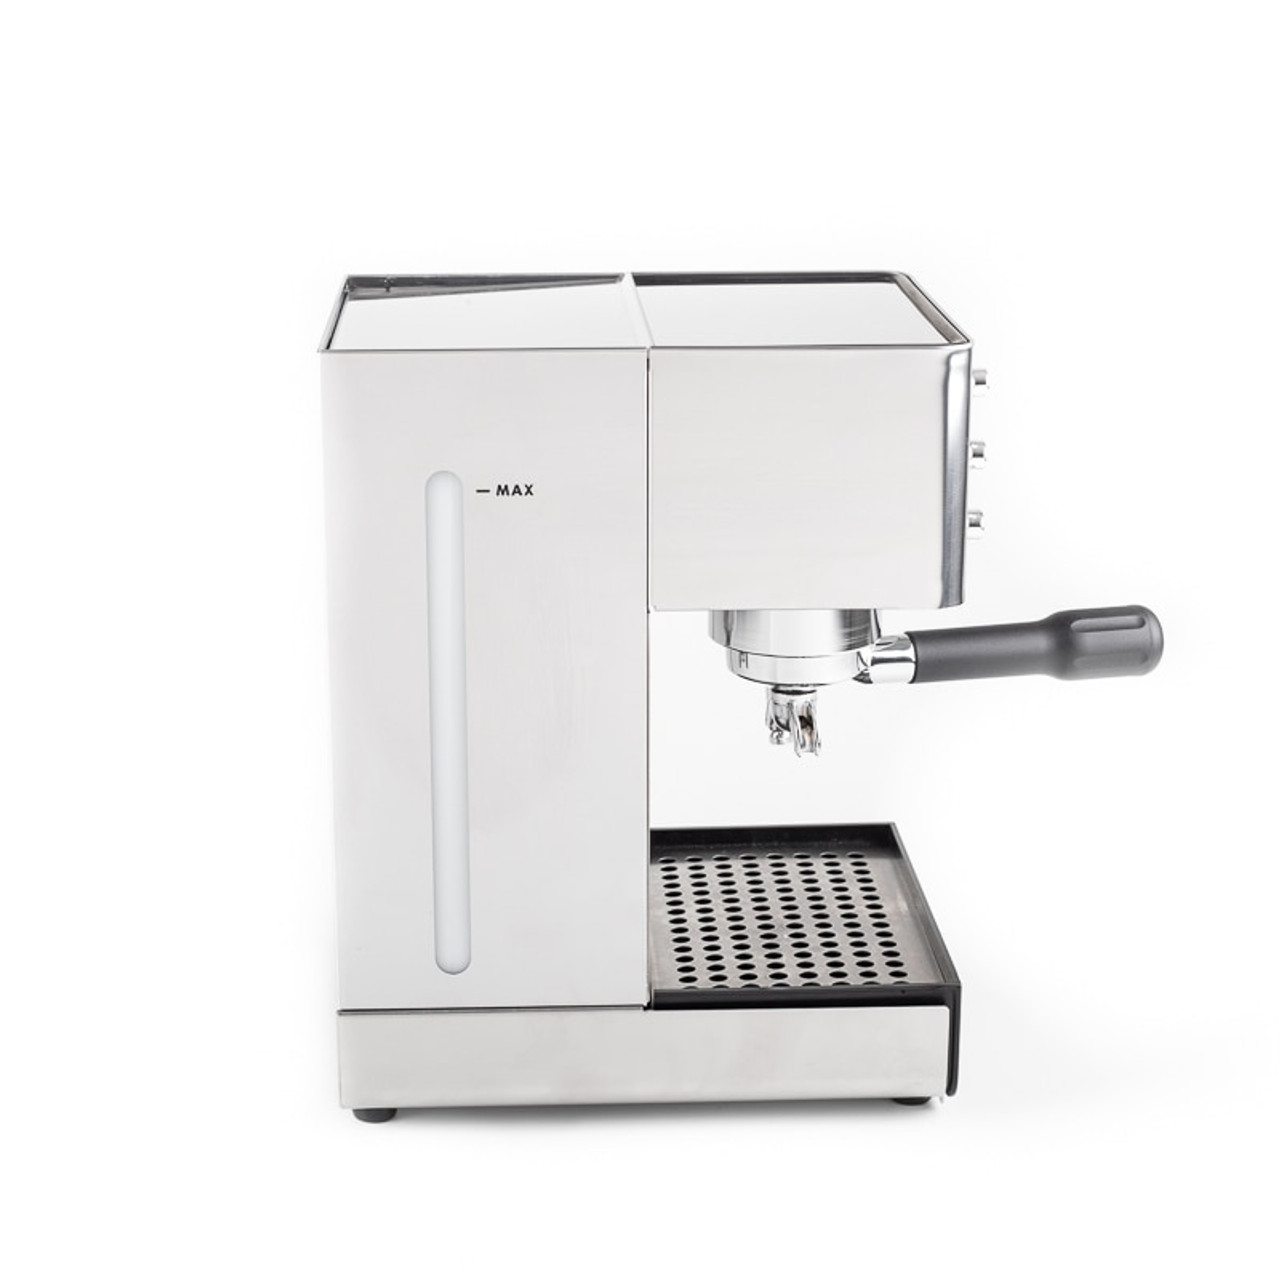 Buy Ex Demo Lelit Anna Pl41 Coffee Machine